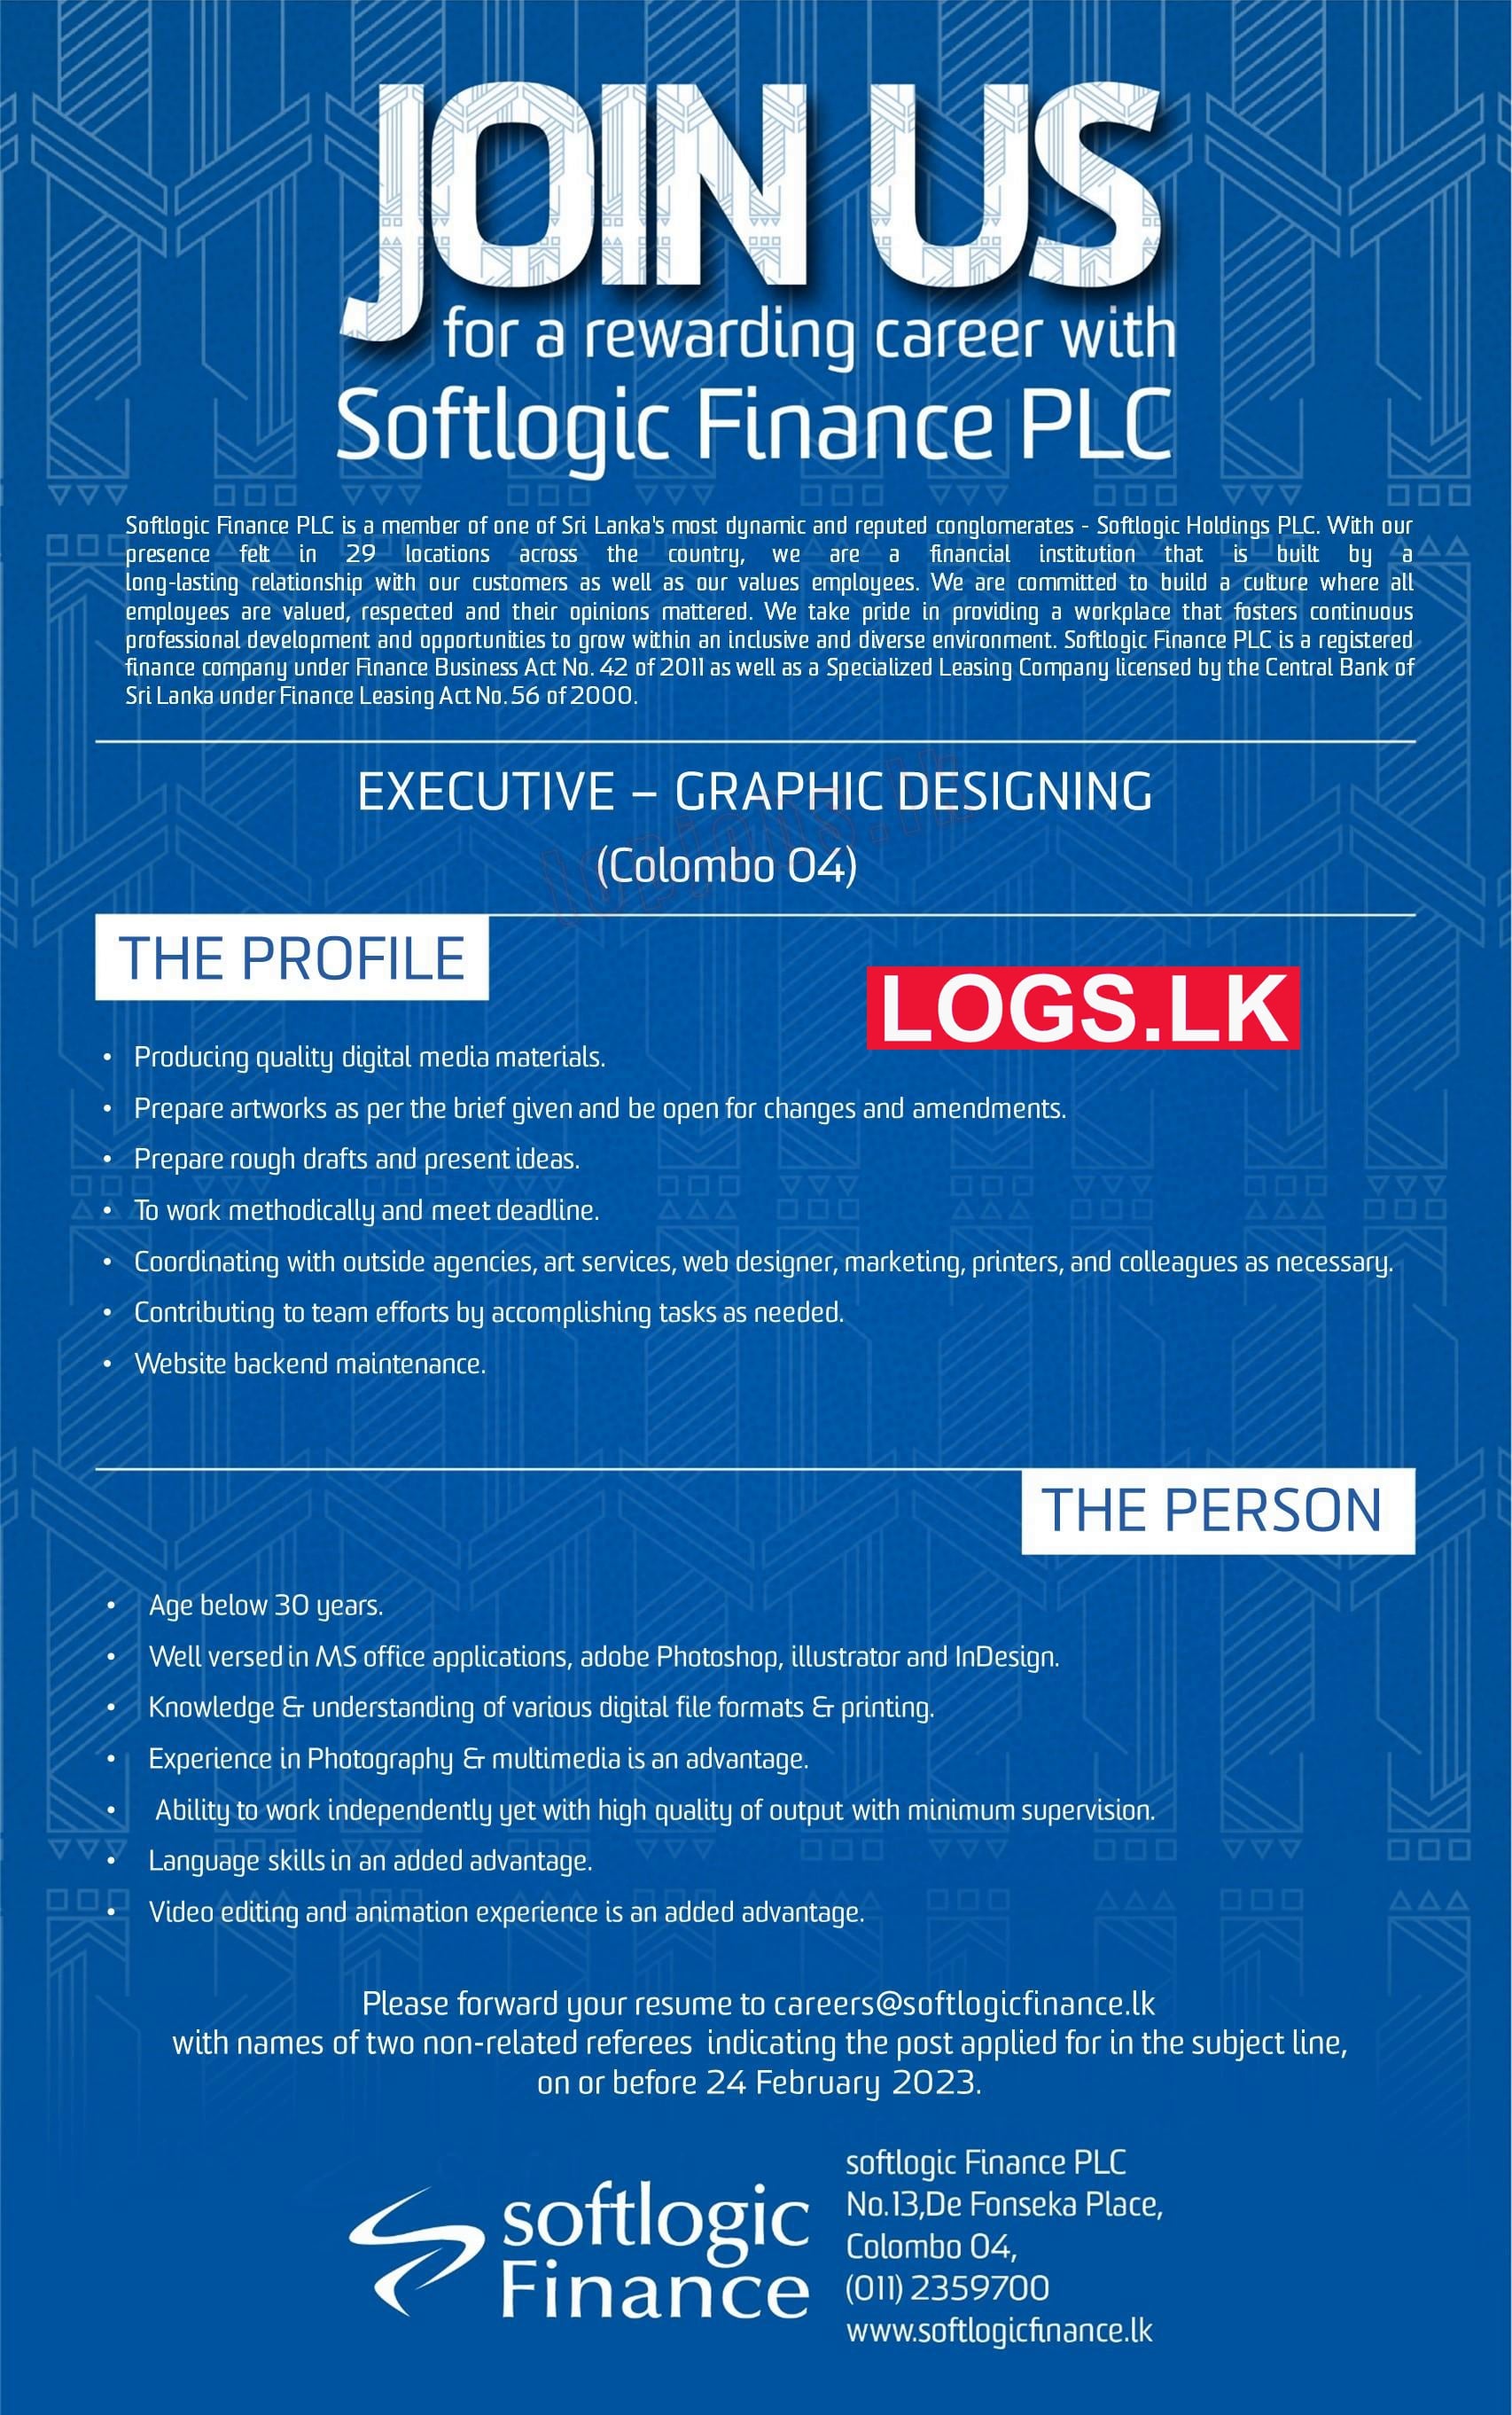 Graphic Designing Executive Vacancy at Softlogic Finance Job Vacancies